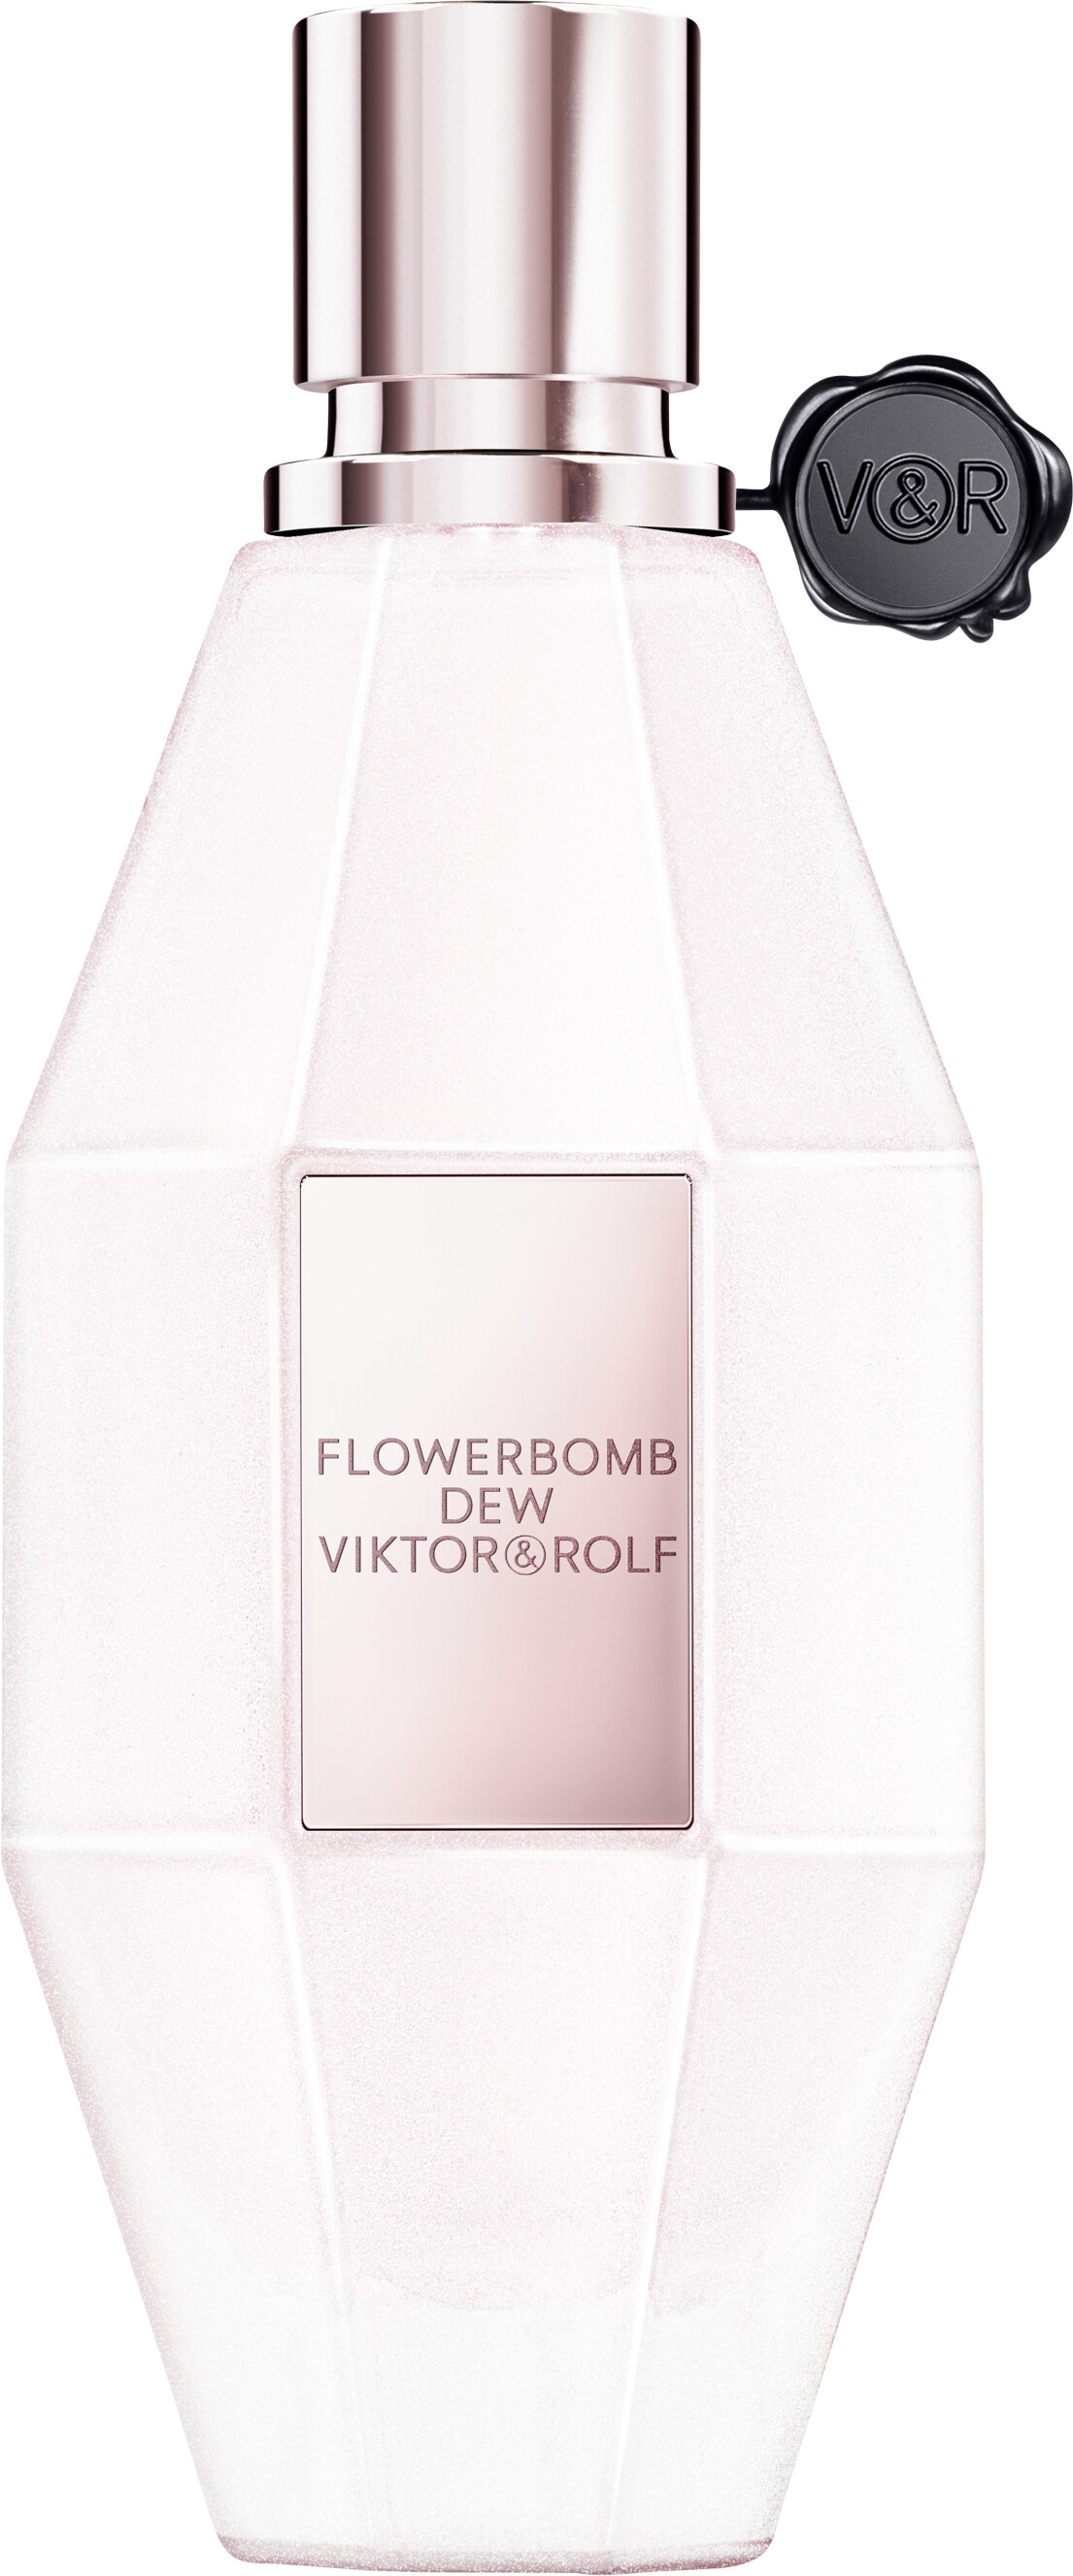 Viktor & Rolf Flowerbomb Dew Eau de Parfum Spray 100ml